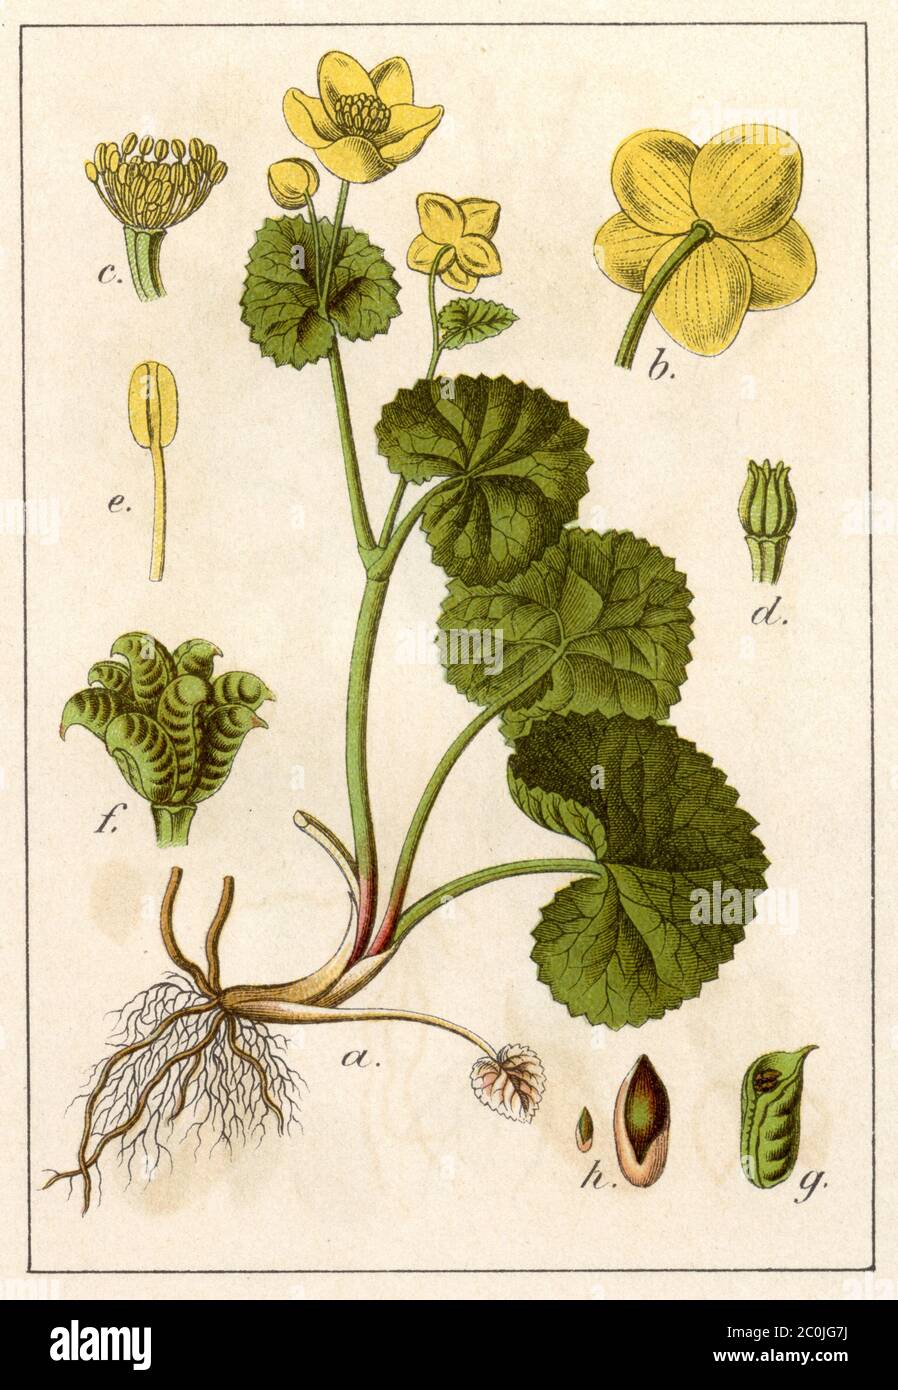 marsh-marigold / Caltha palustris / Sumpfdotterblume (botany book, 1901) Stock Photo